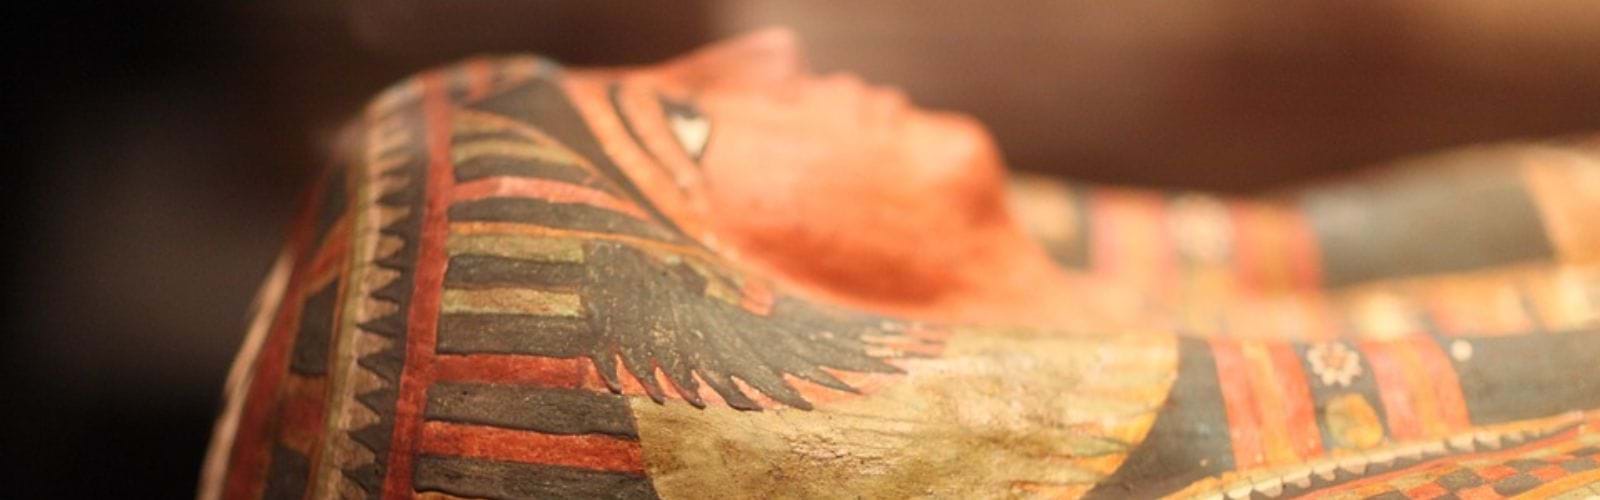 Mummification in ancient Egypt